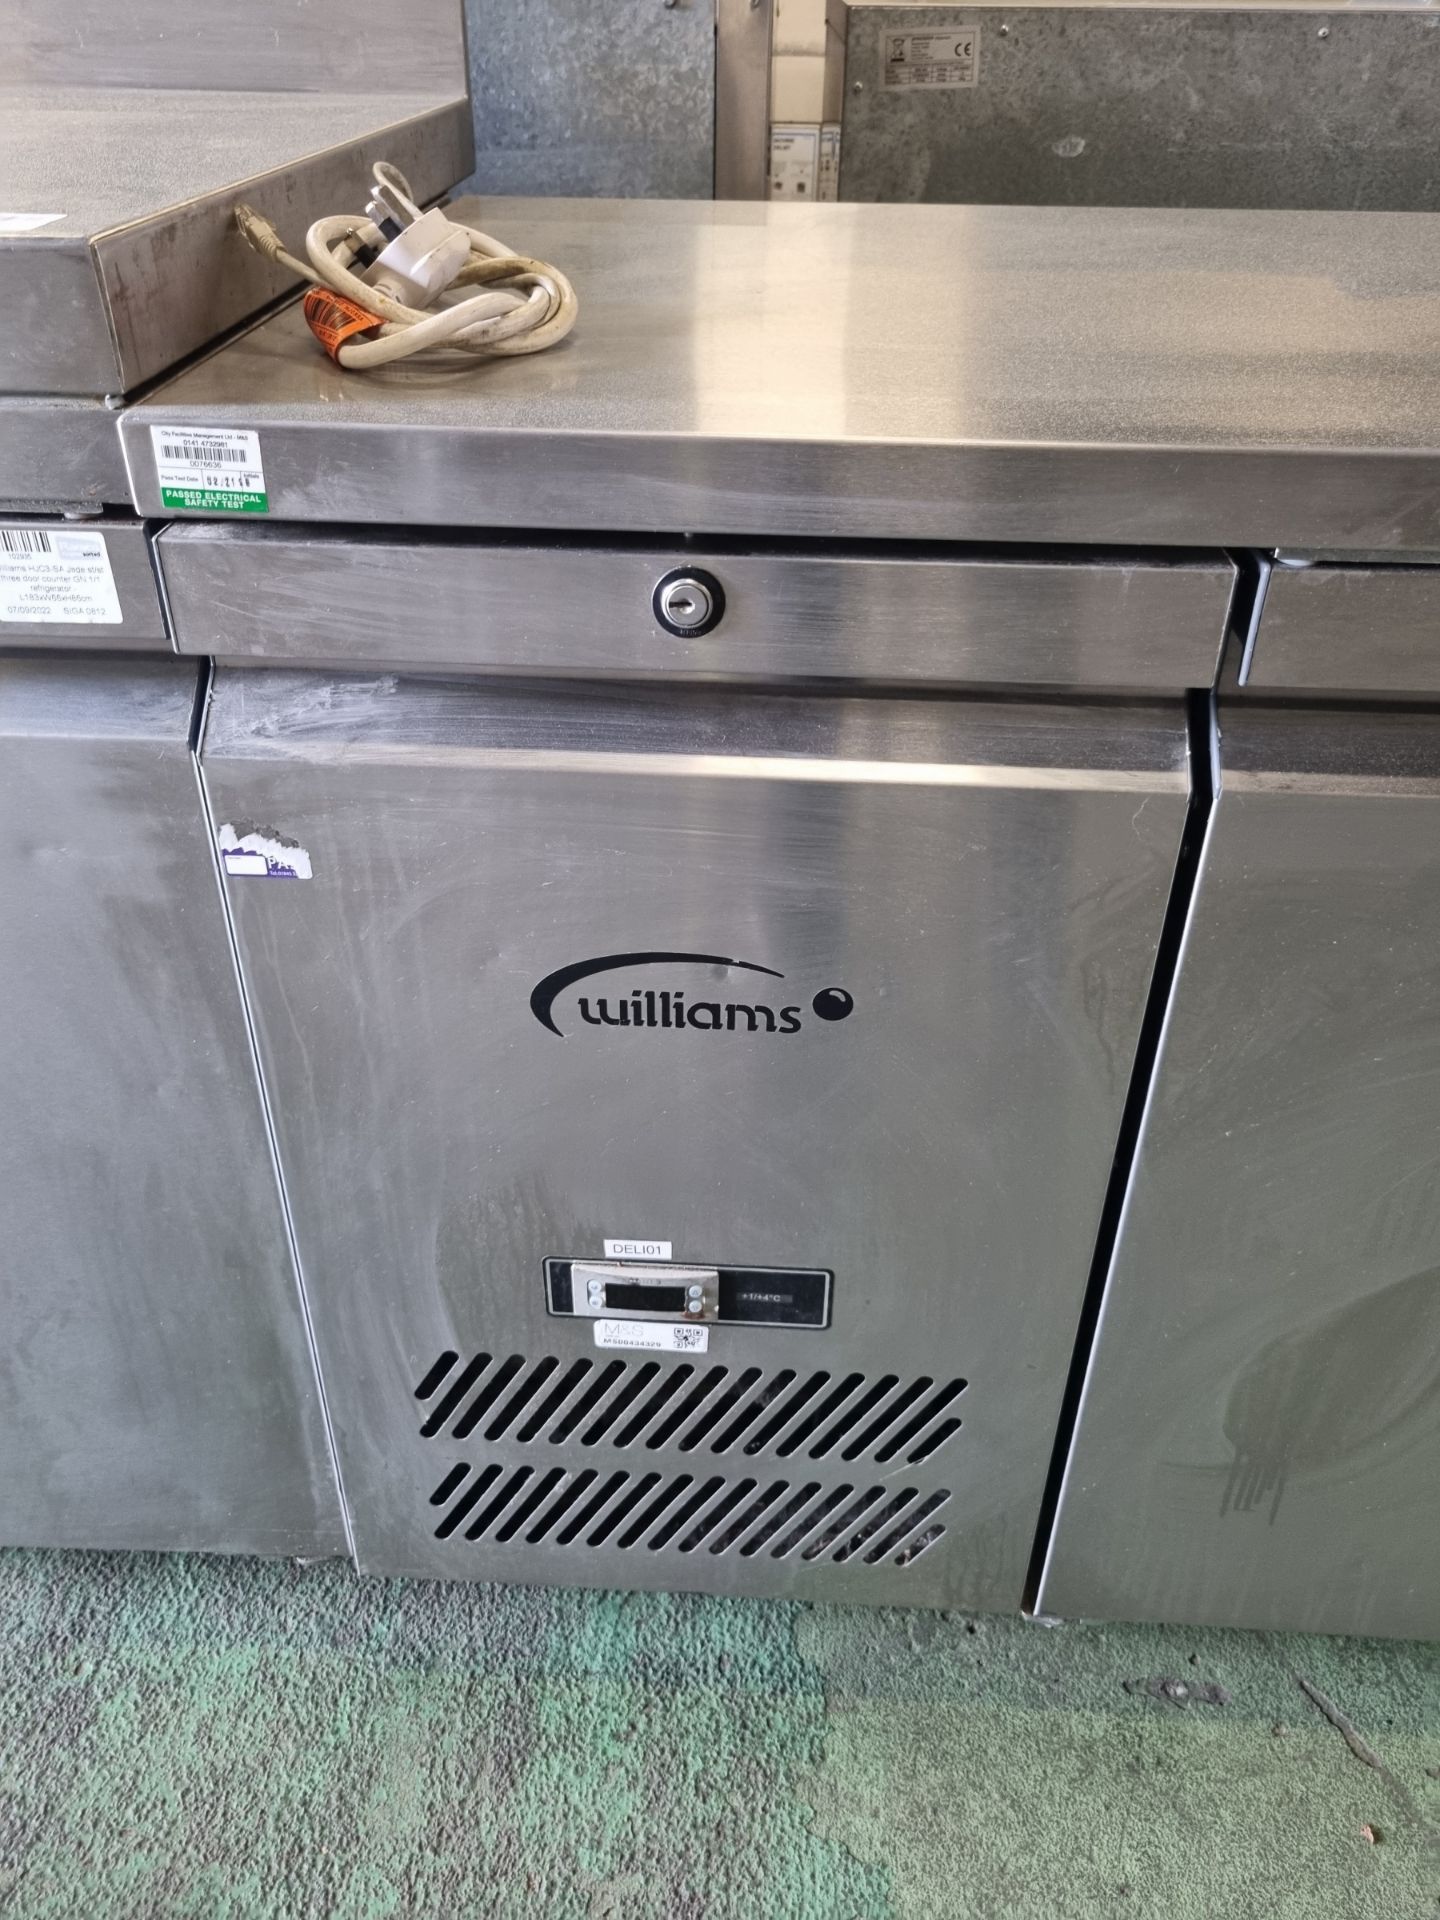 Williams HJC3-SA Jade st/st three door counter GN 1/1 refrigerator - L183xW66xH86cm - Image 6 of 6